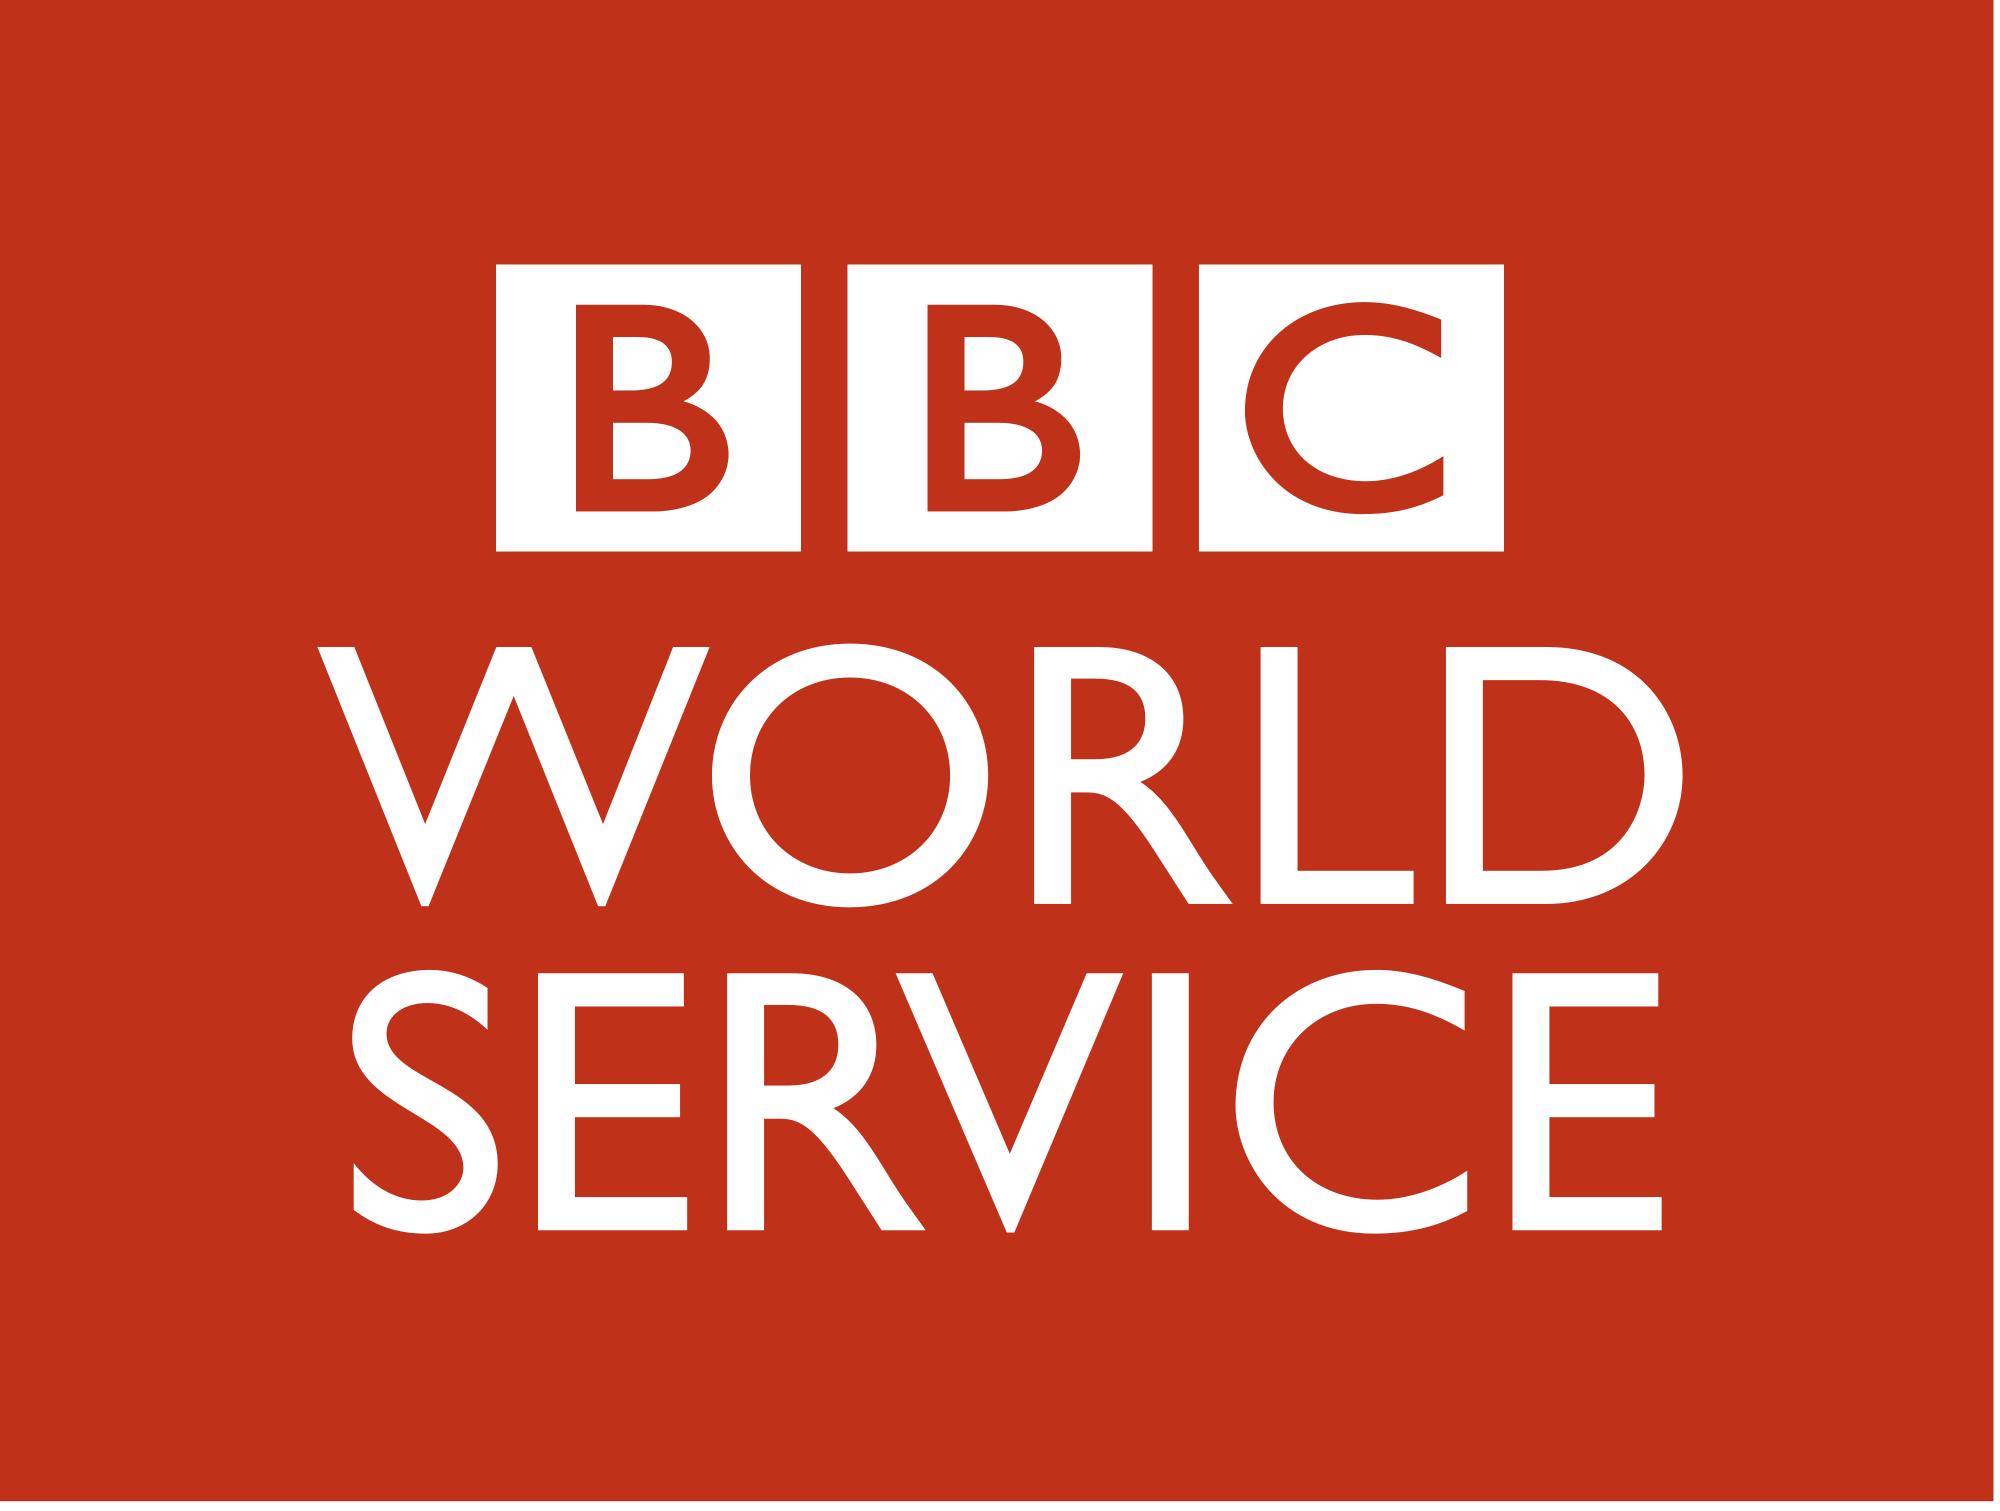 On sex segregation, BBC World Service, 14 December 2013